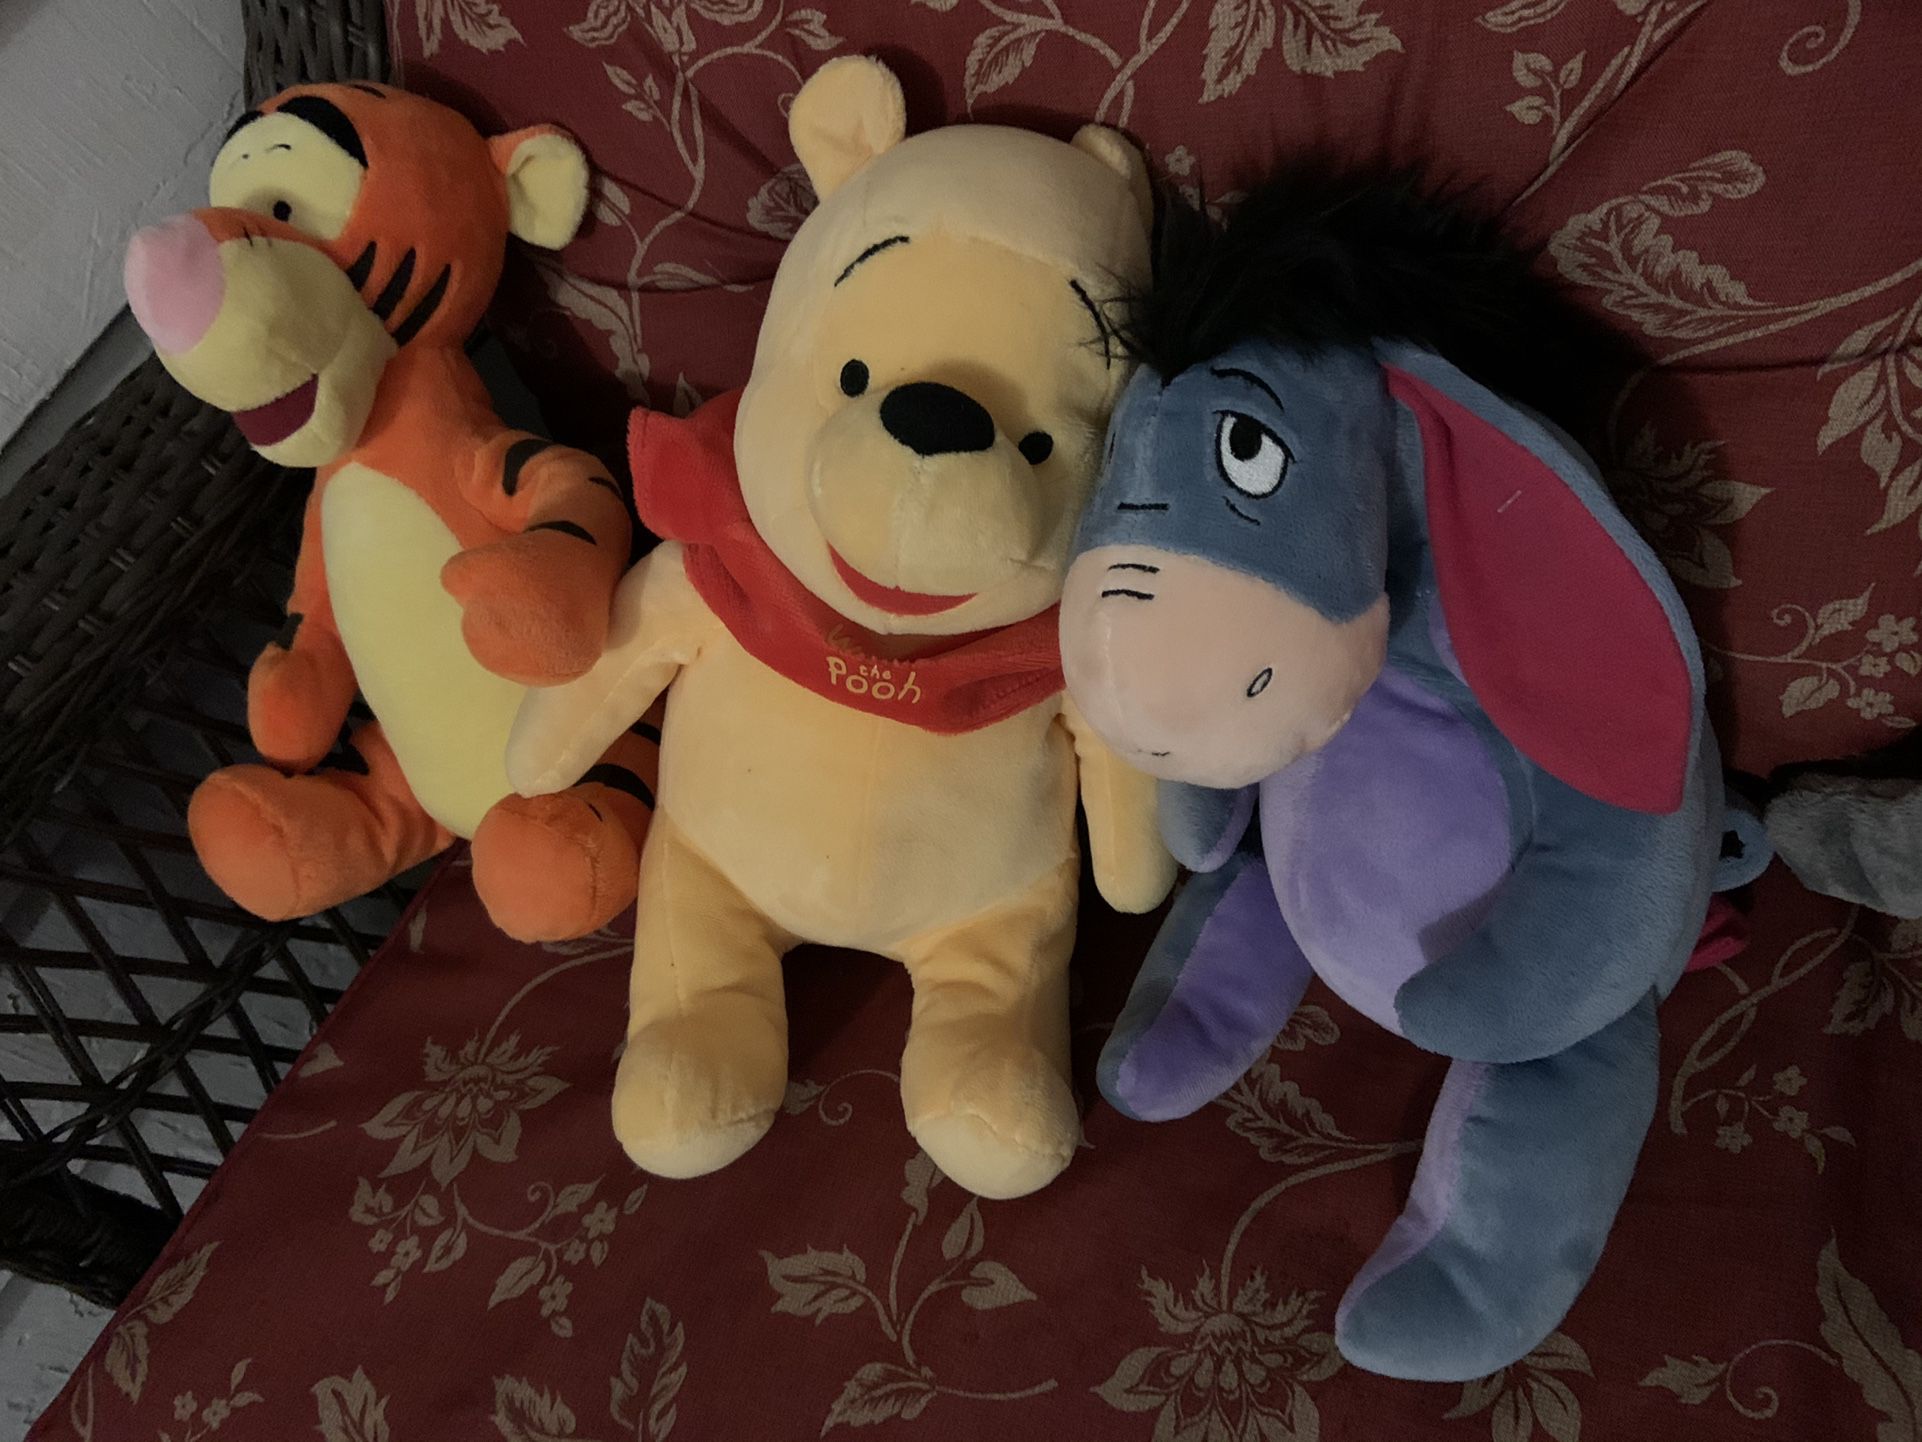 3 14” Stuffed Animals New Winnie the Poo Tiger Eeyore New